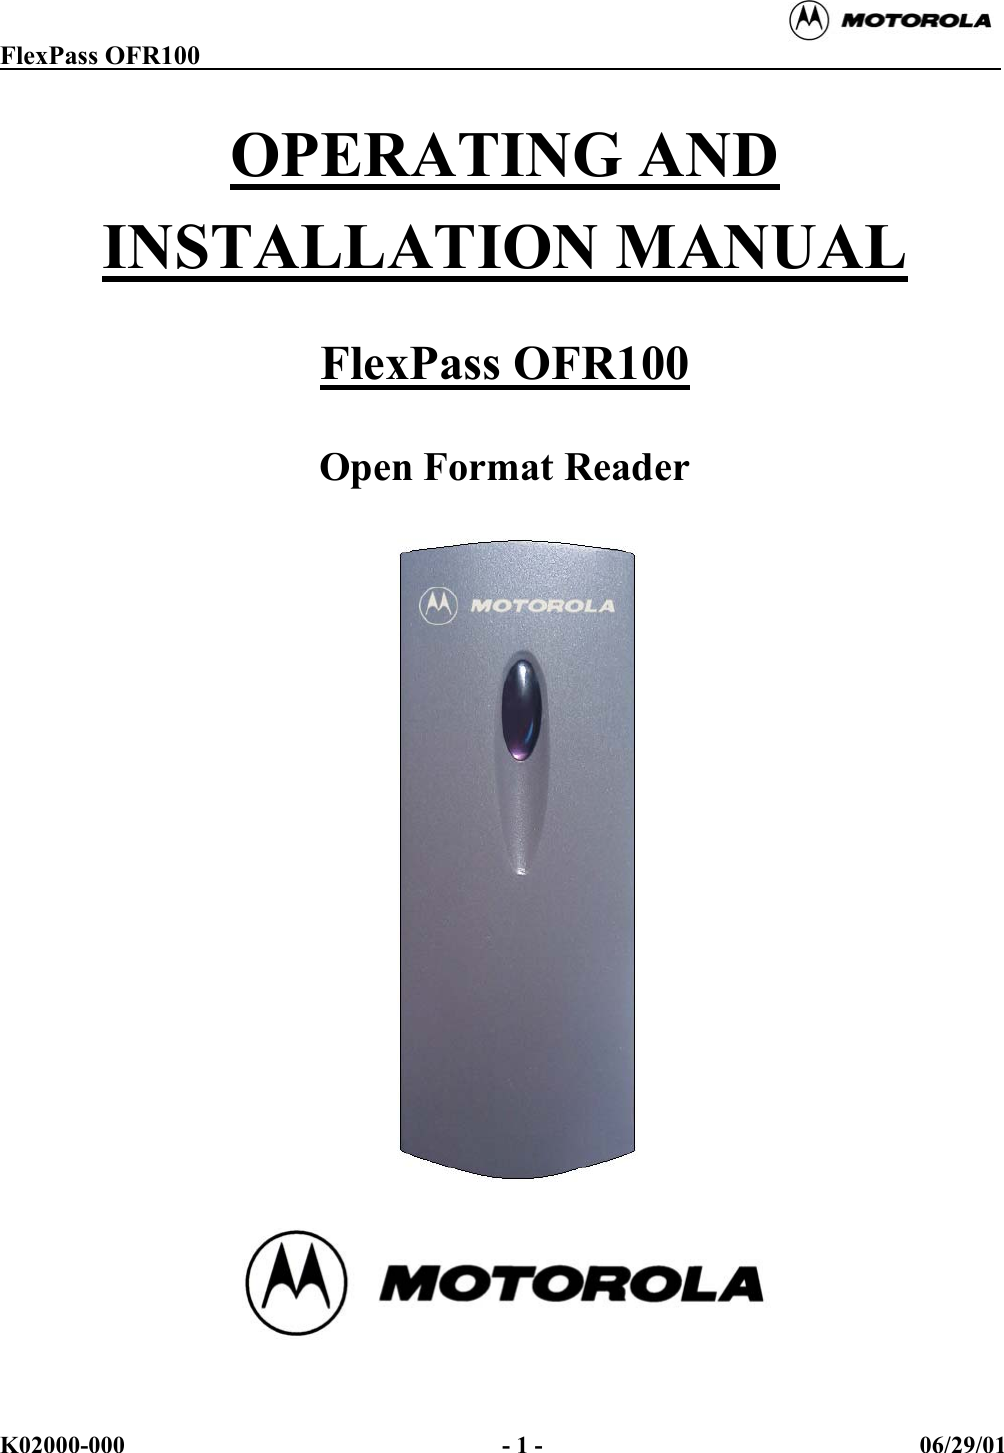   FlexPass OFR100                                                              K02000-000                               - 1 -                               06/29/01  OPERATING AND INSTALLATION MANUAL  FlexPass OFR100  Open Format Reader          